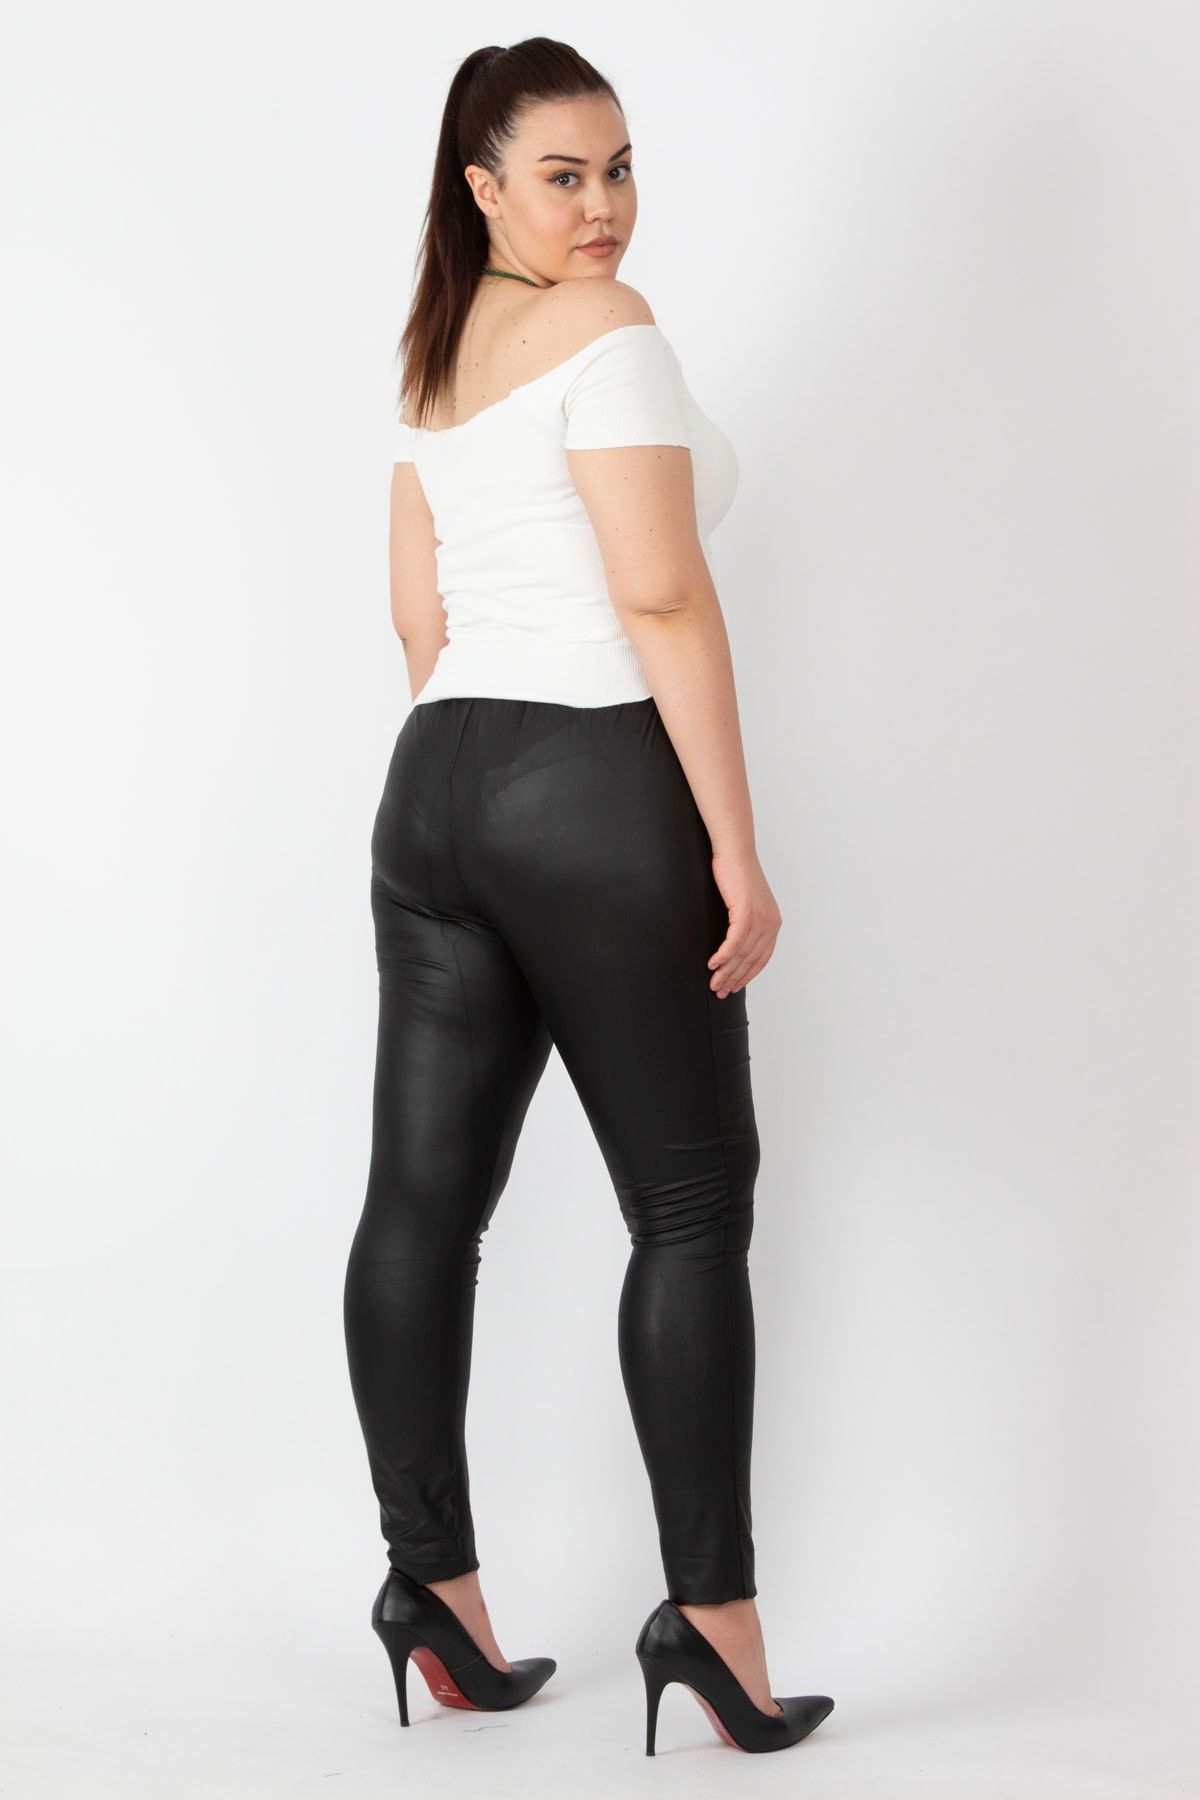 Şans Damen-Leggings, große Größe, schwarze Lederoptik, elastische Taille,  Hose 65n16748 - Trendyol